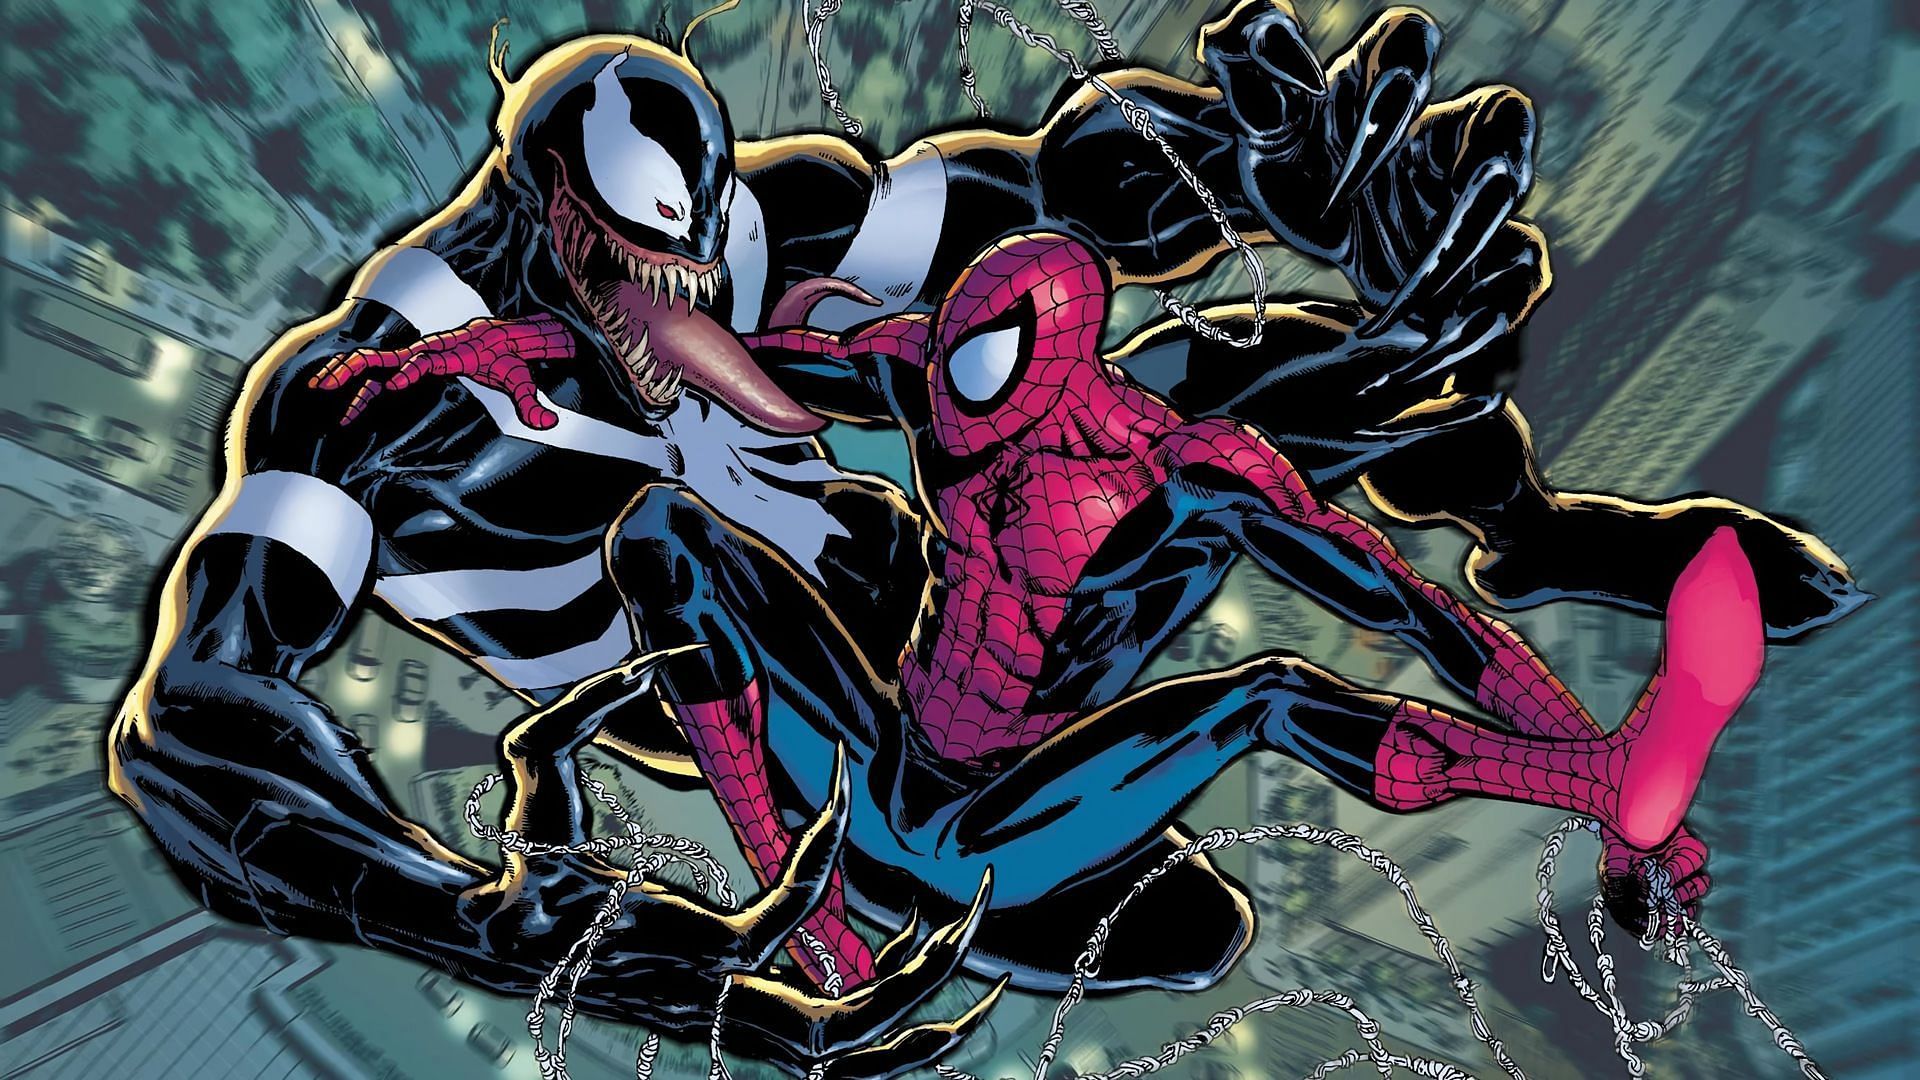 Venom vs Spiderman (Image via Marvel Comics)